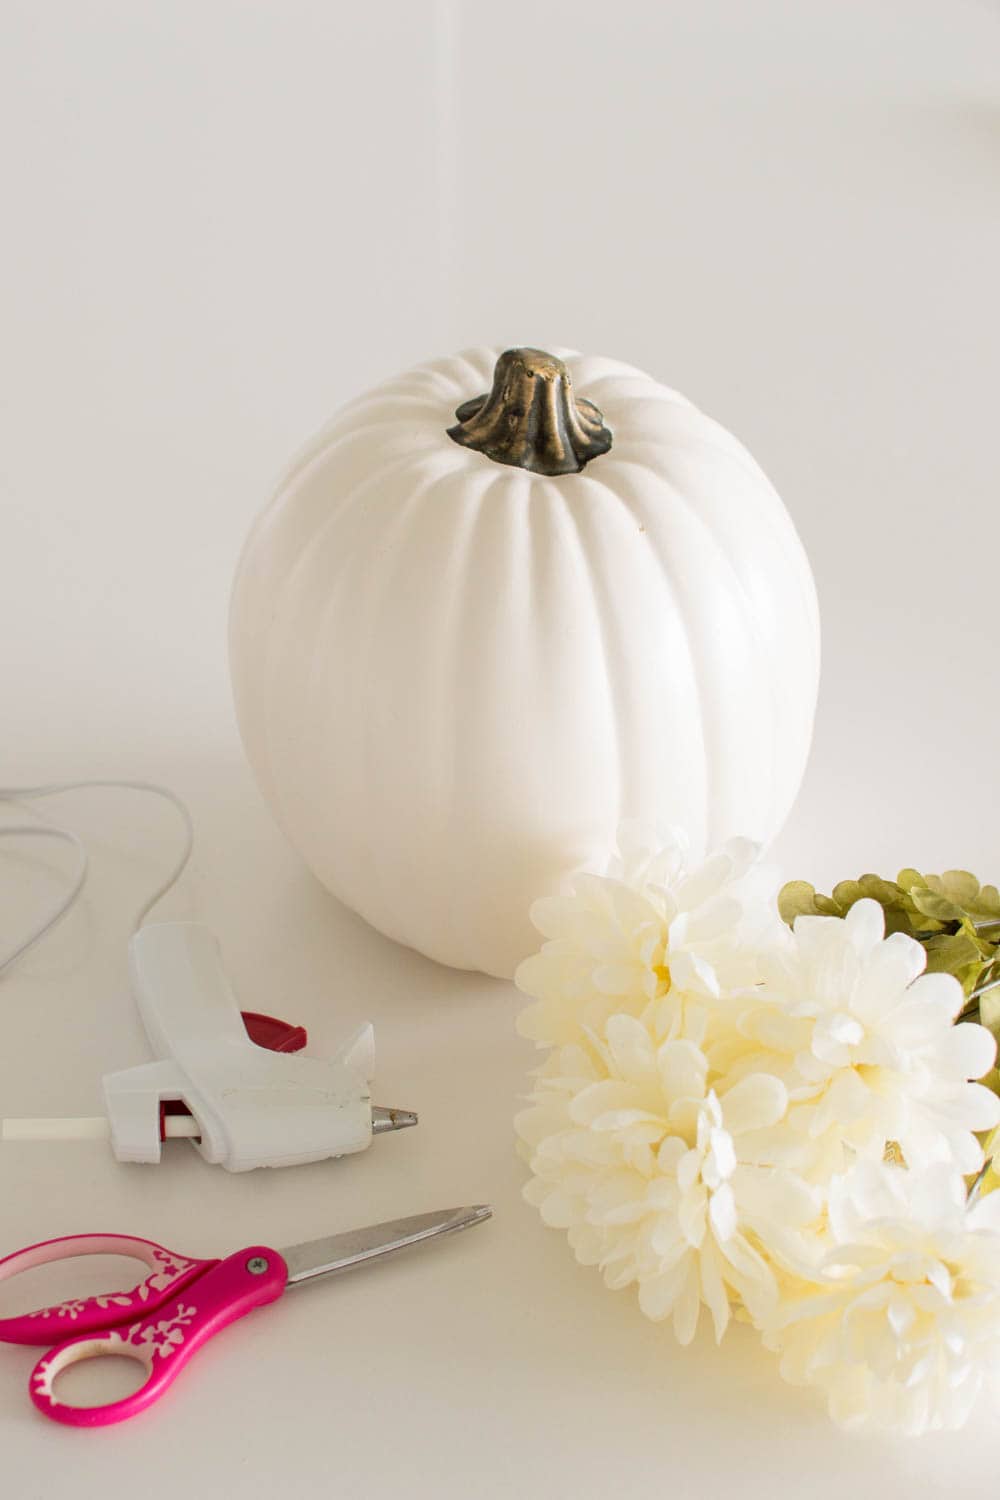 Required supplies including a white plastic pumpkin and a hot glue gun to create a DIY White Pumpkin Centerpiece